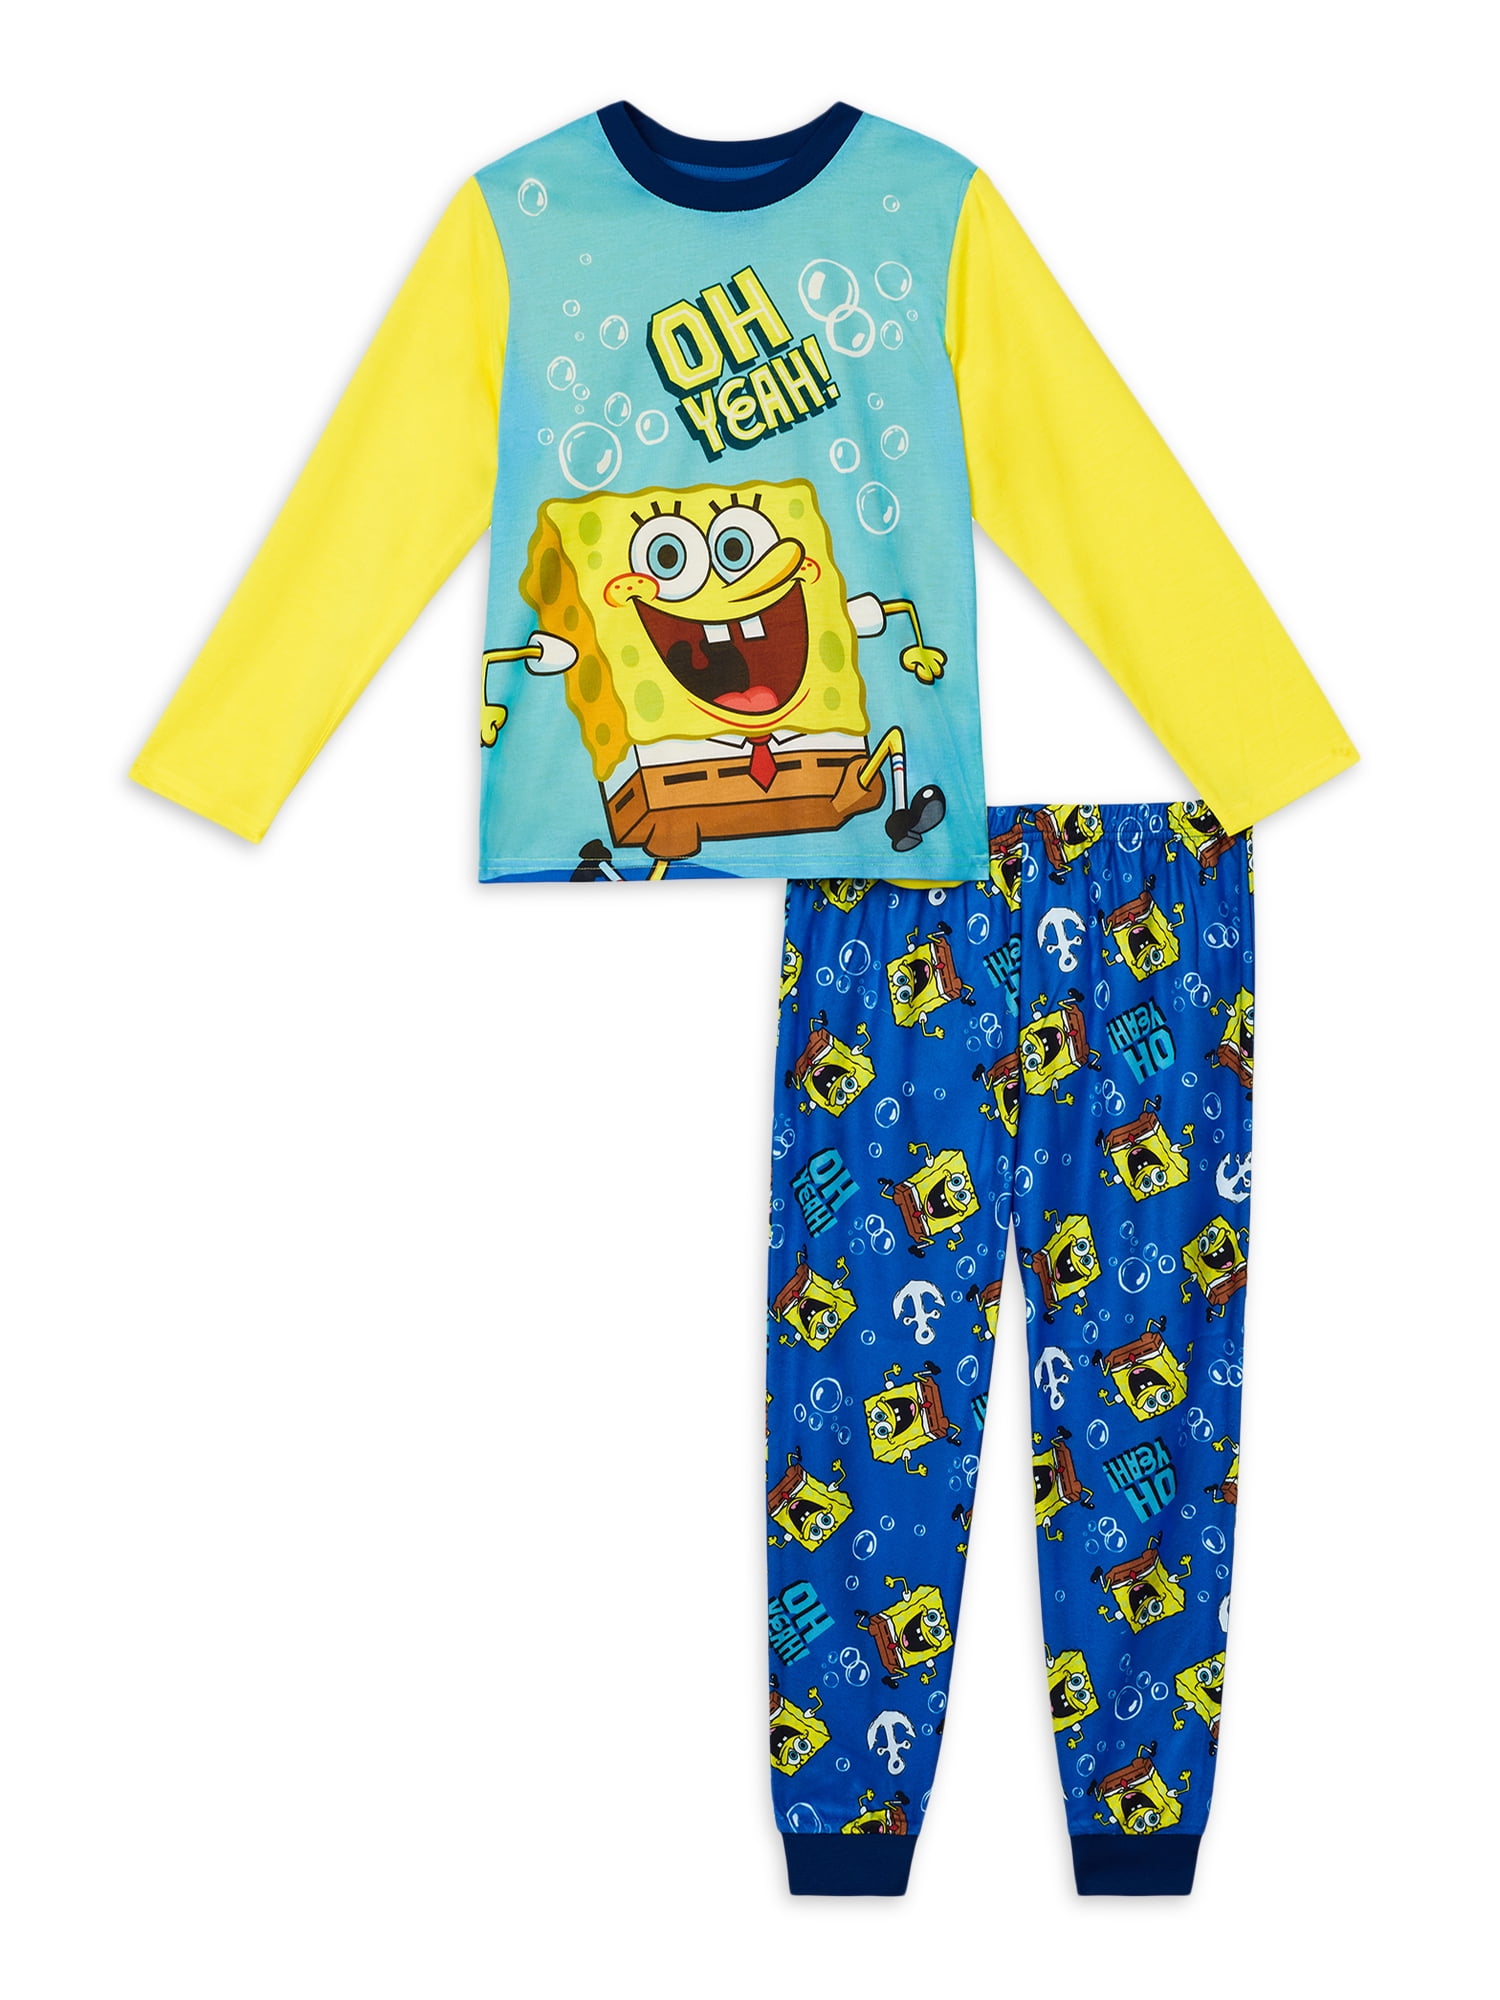 SpongeBob SquarePants Spongebob Boys Long Sleeve Pajamas Set, 2-Piece, Sizes 4-12